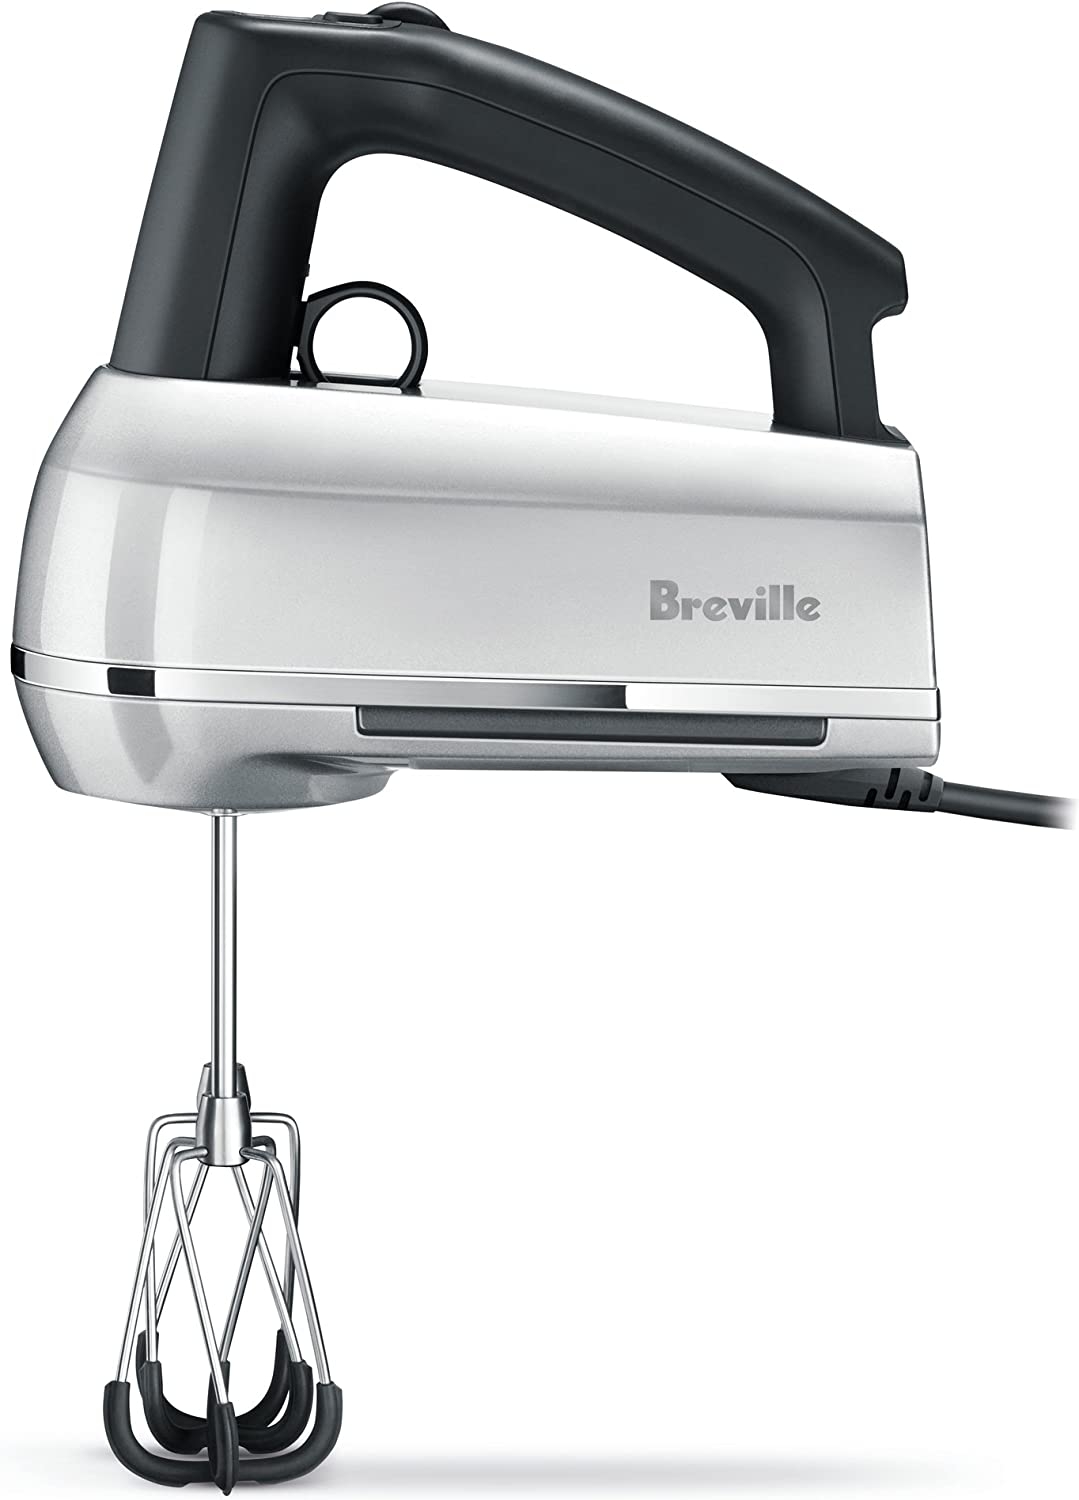 Breville Handy Mix Scraper Hand Mixer, Silver, BHM800SIL Import To Shop ×Product customization General Description Gallery